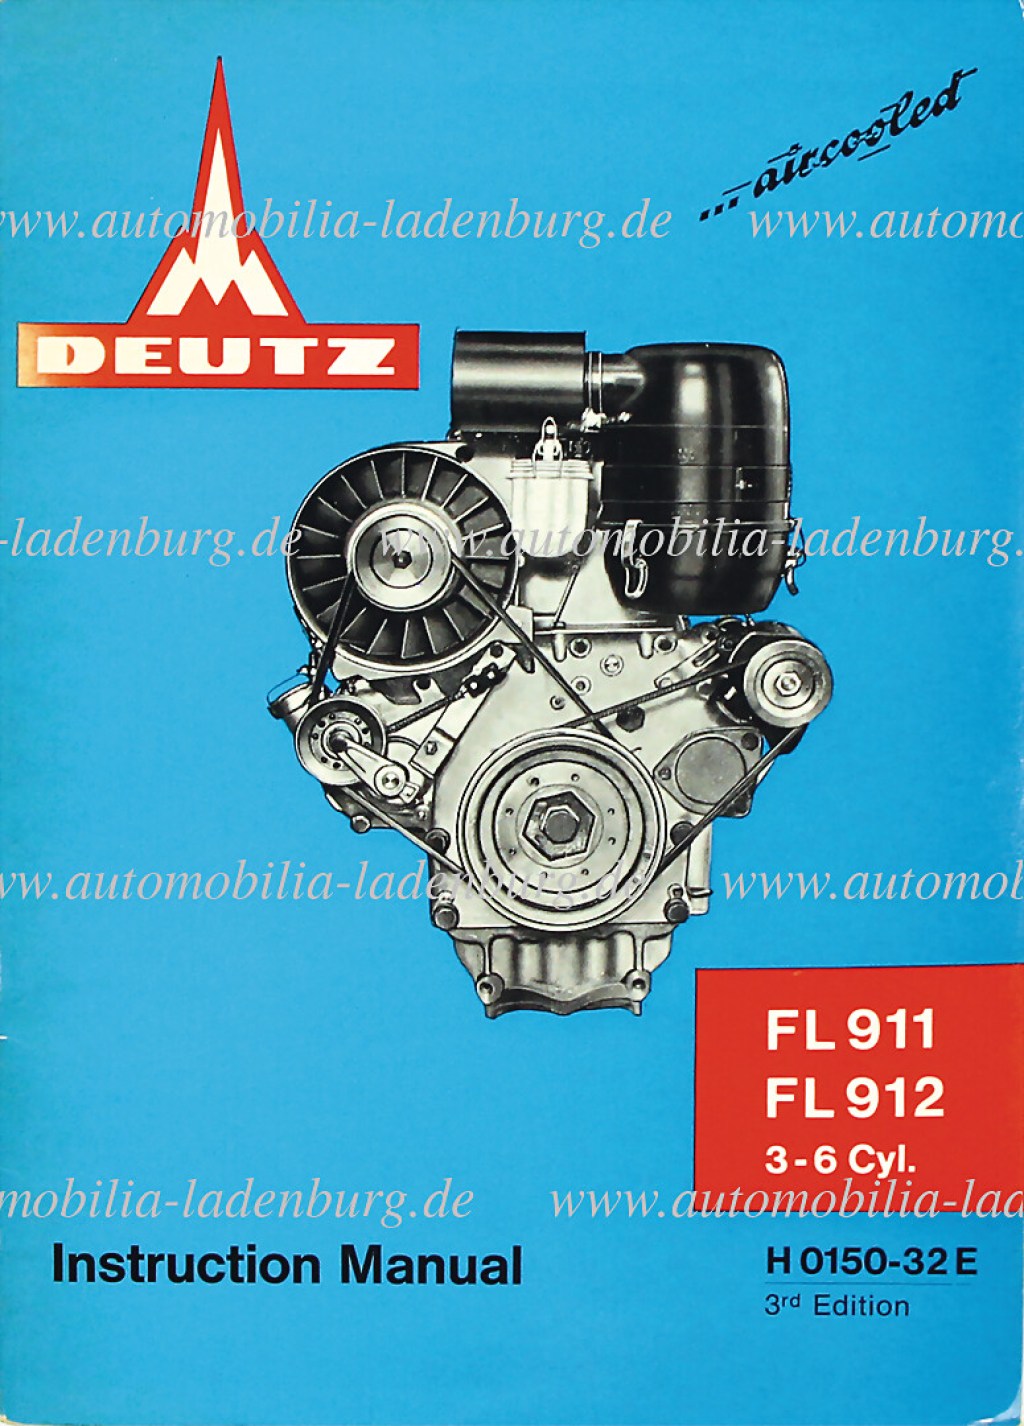 Picture of: Automobilia Ladenburg – Marcel Seidel Auktionen